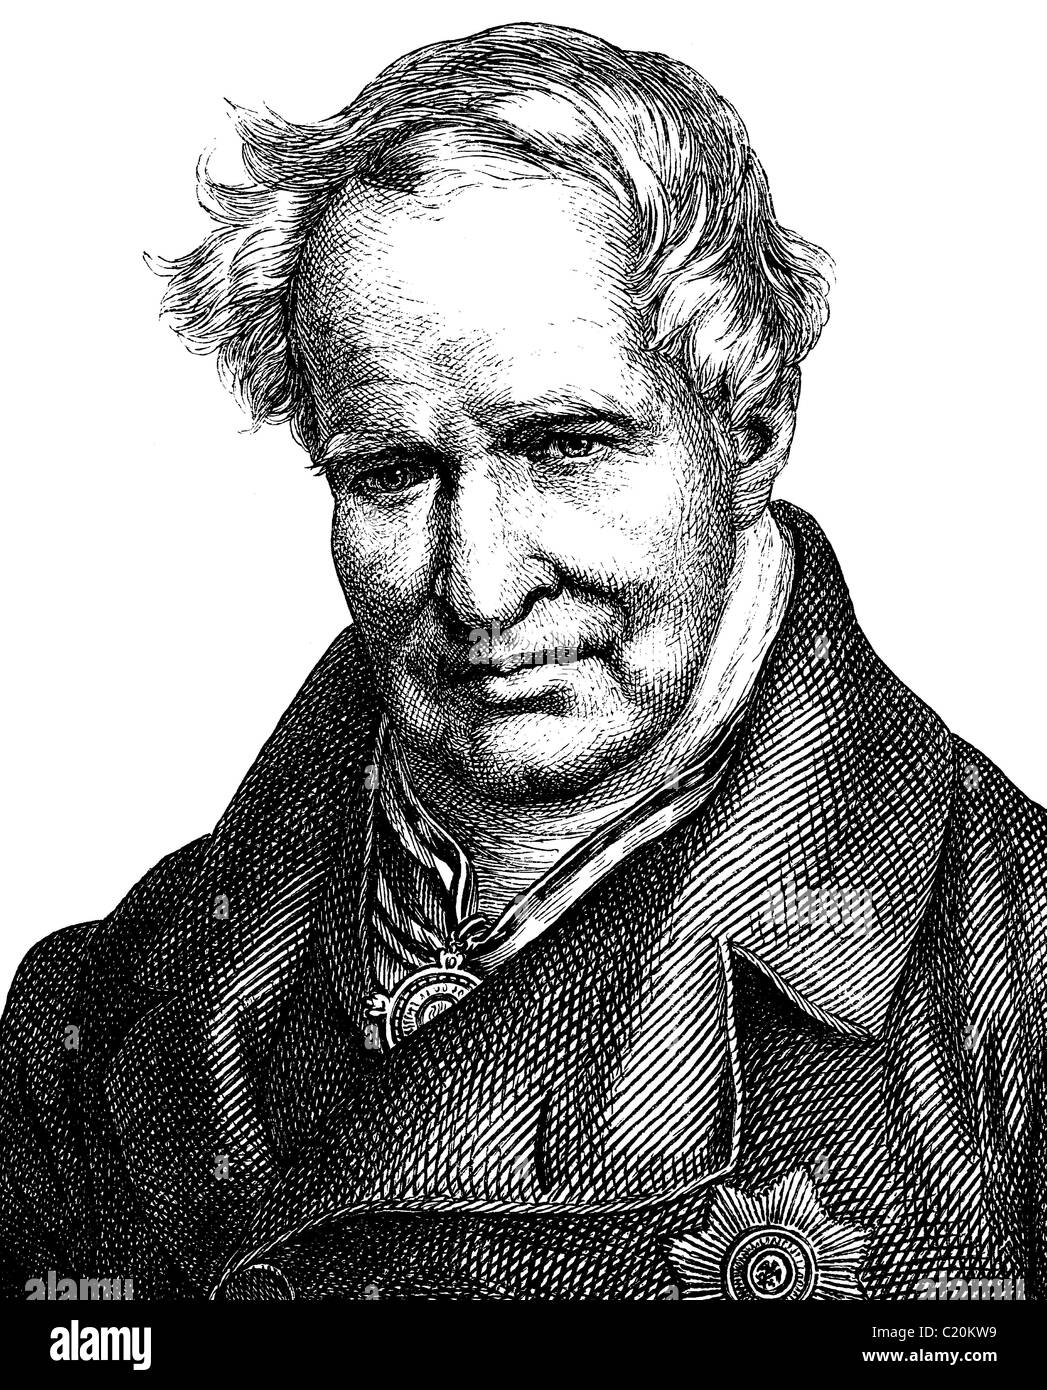 Digital improved image of Alexander von Humboldt, German naturalist, 1769 - 1859, portrait, historic illustration, 1880 Stock Photo